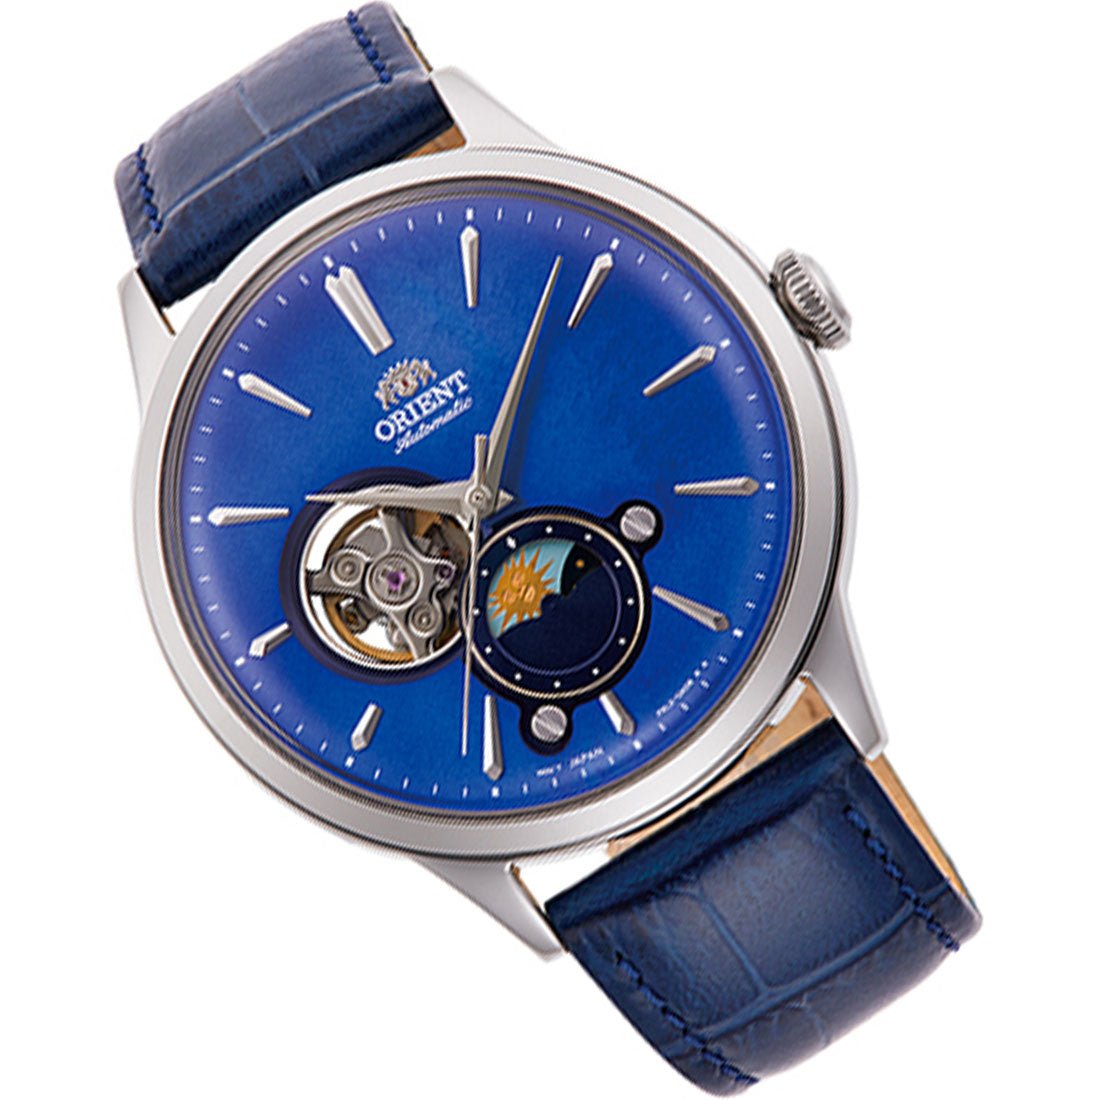 Orient Mechanical Sun Moon RA-AS0103A10B RA-AS0103A Leather Blue Analog Watch -Orient